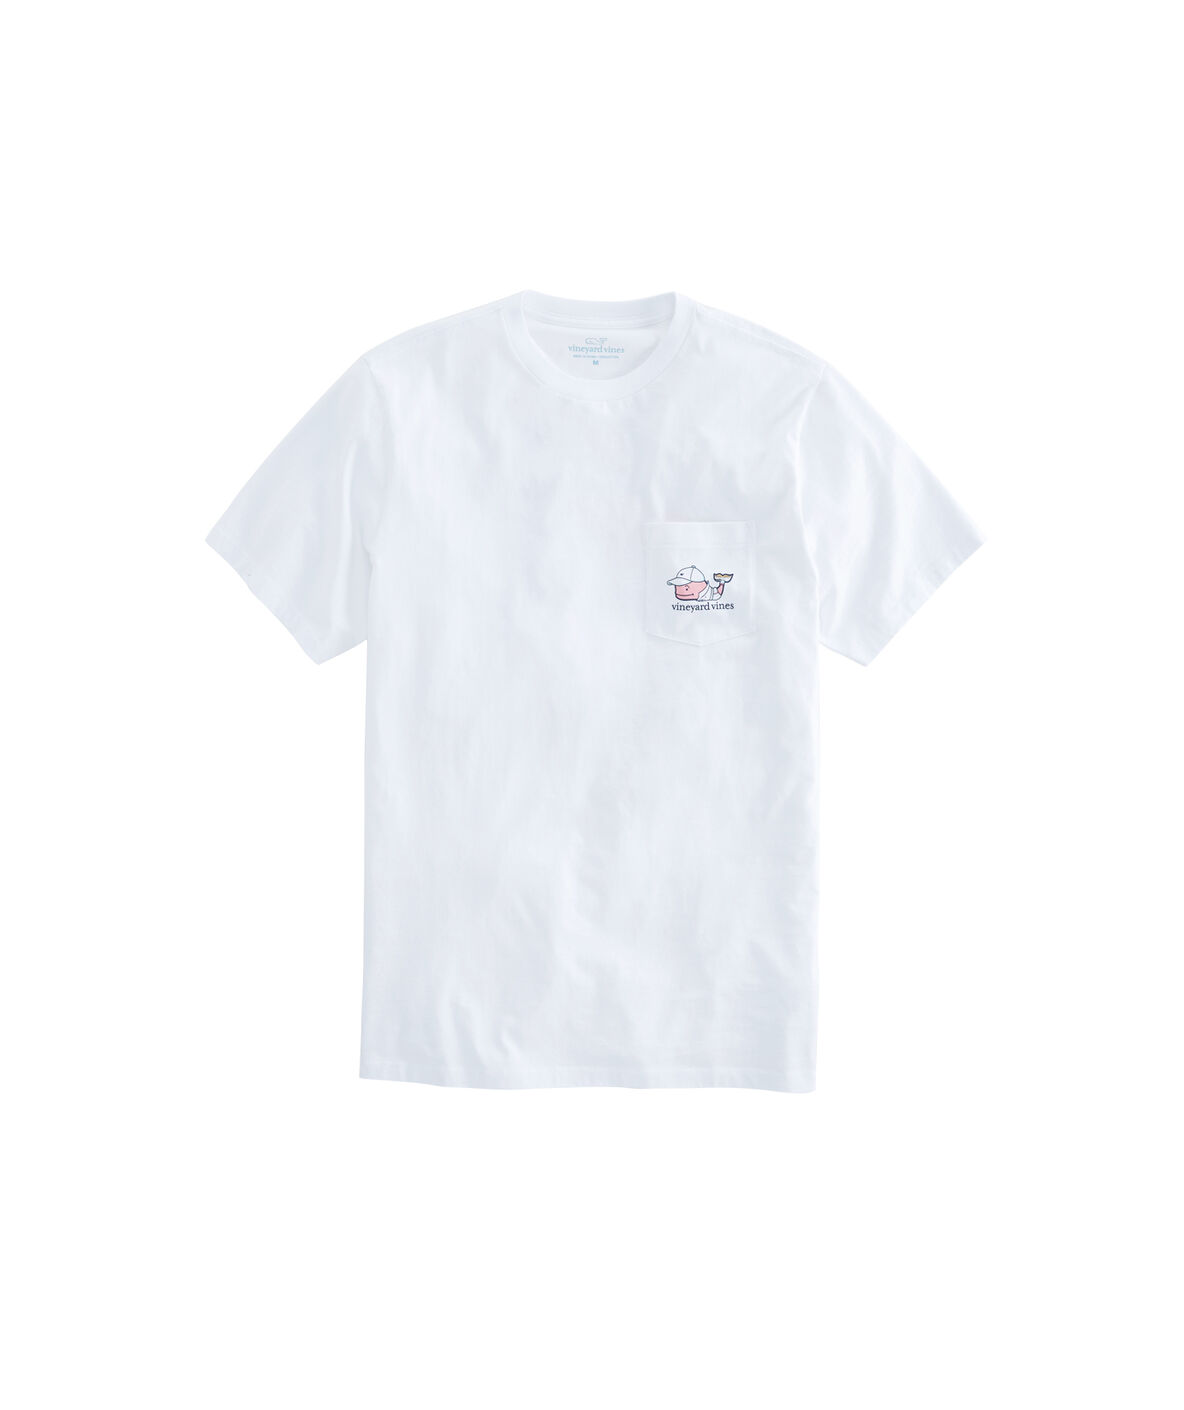 Men's Vineyard Vines White Arnold Palmer Invitational Pocket T-Shirt